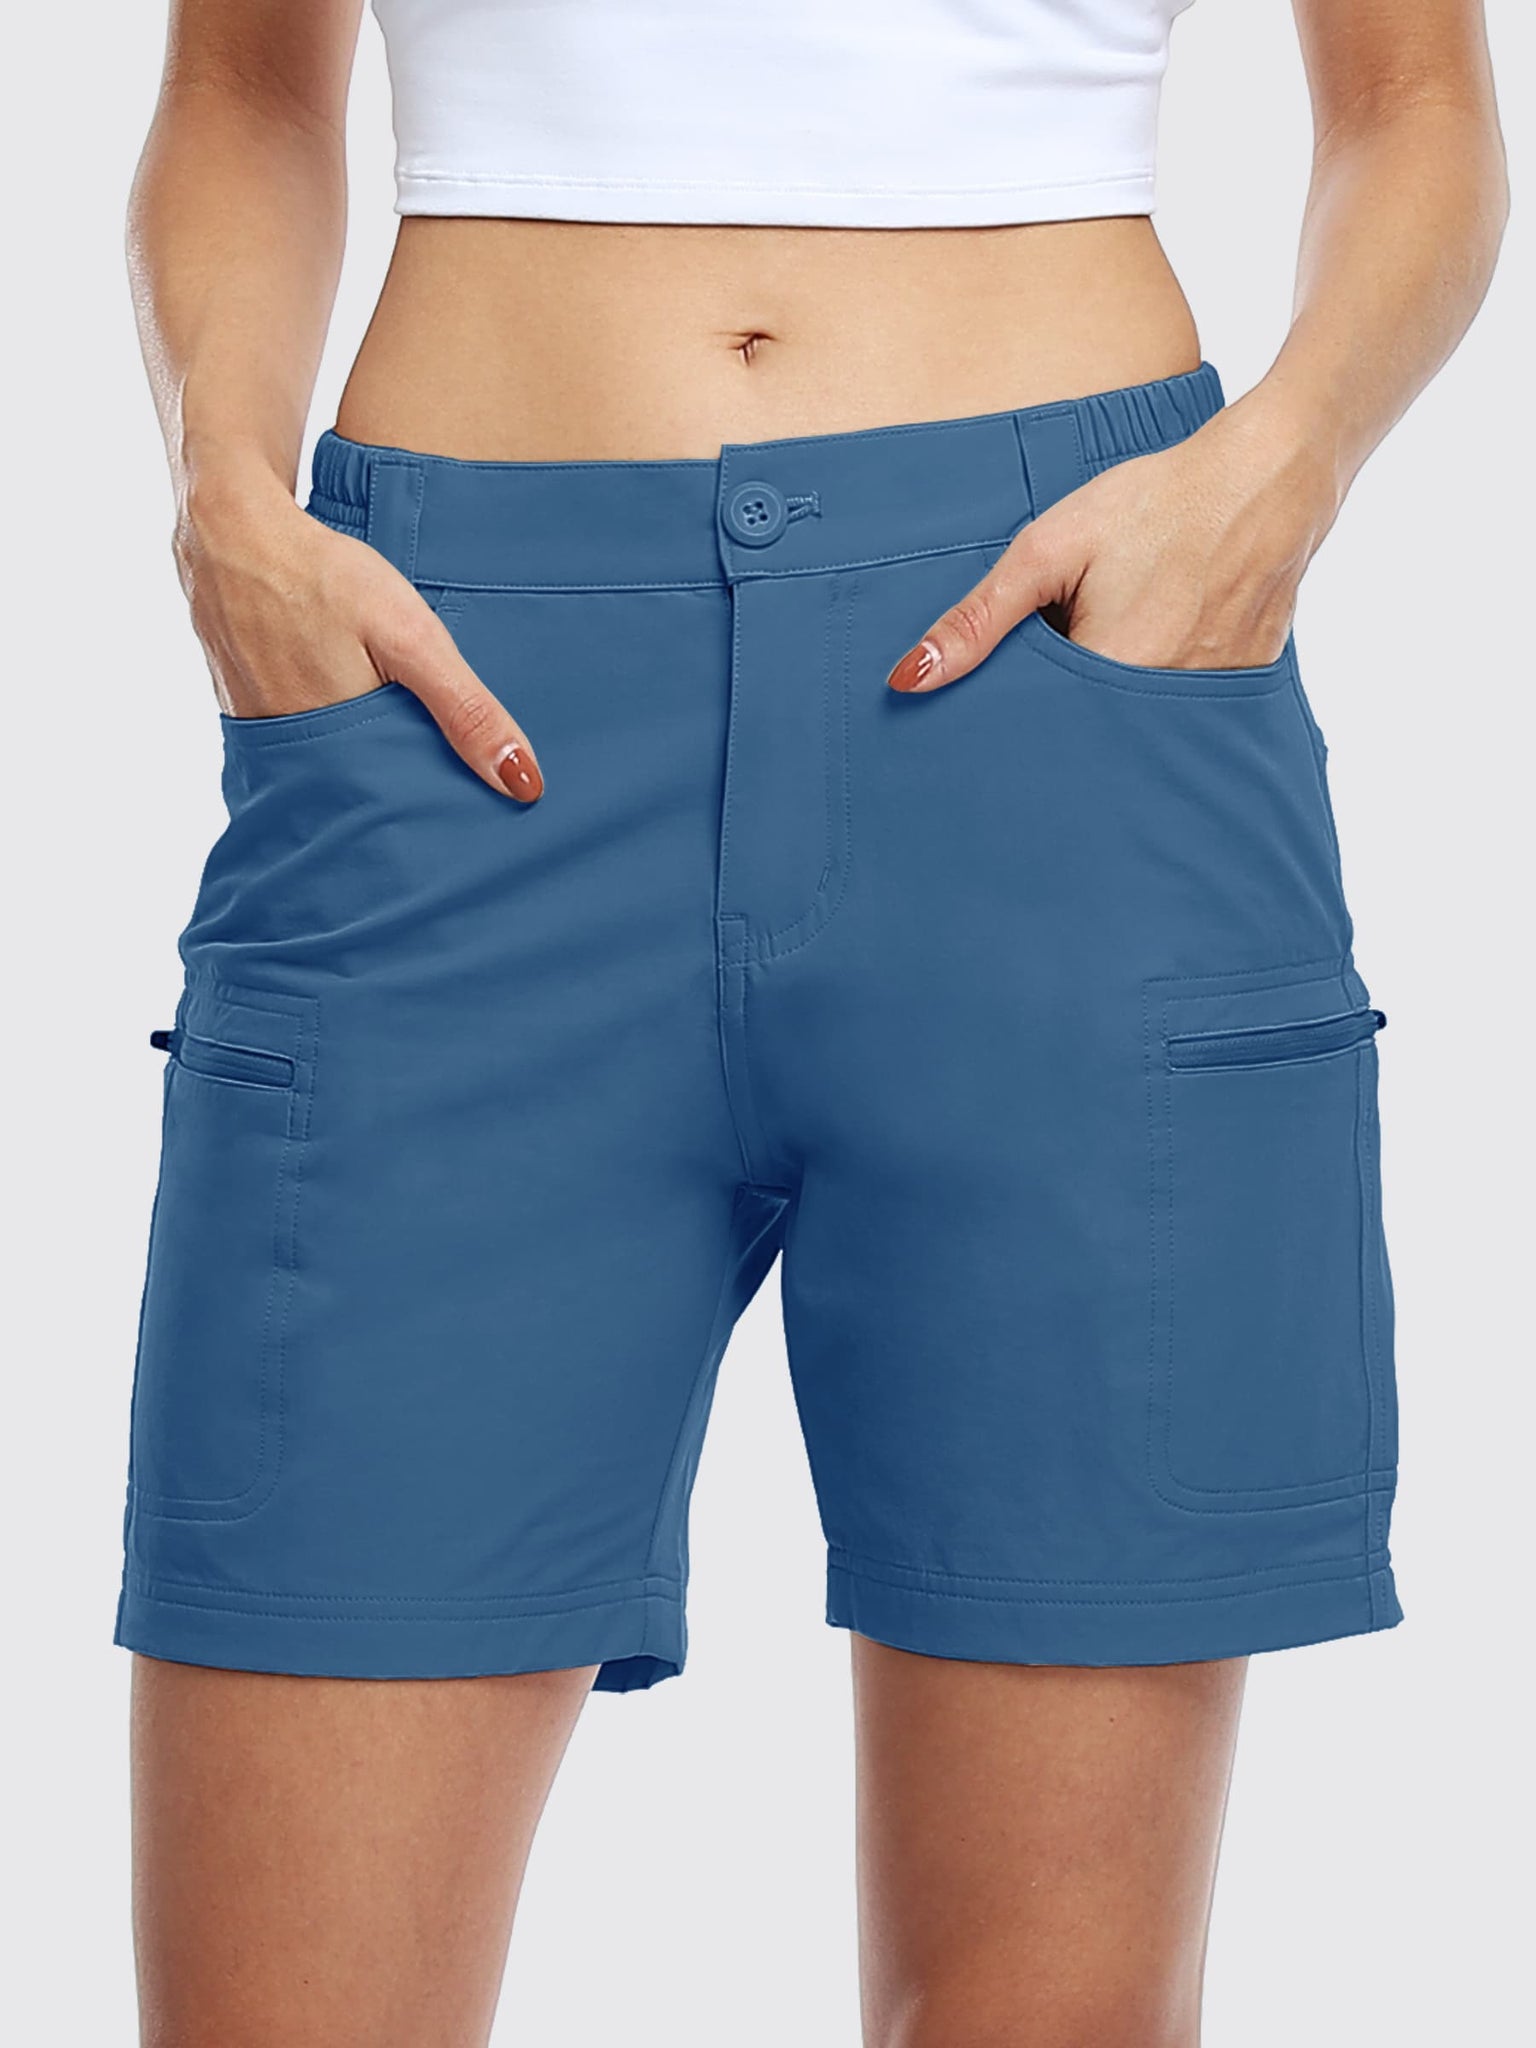 Willit Women's Outdoor Cargo Shorts 6 Inseam_Blue_model1